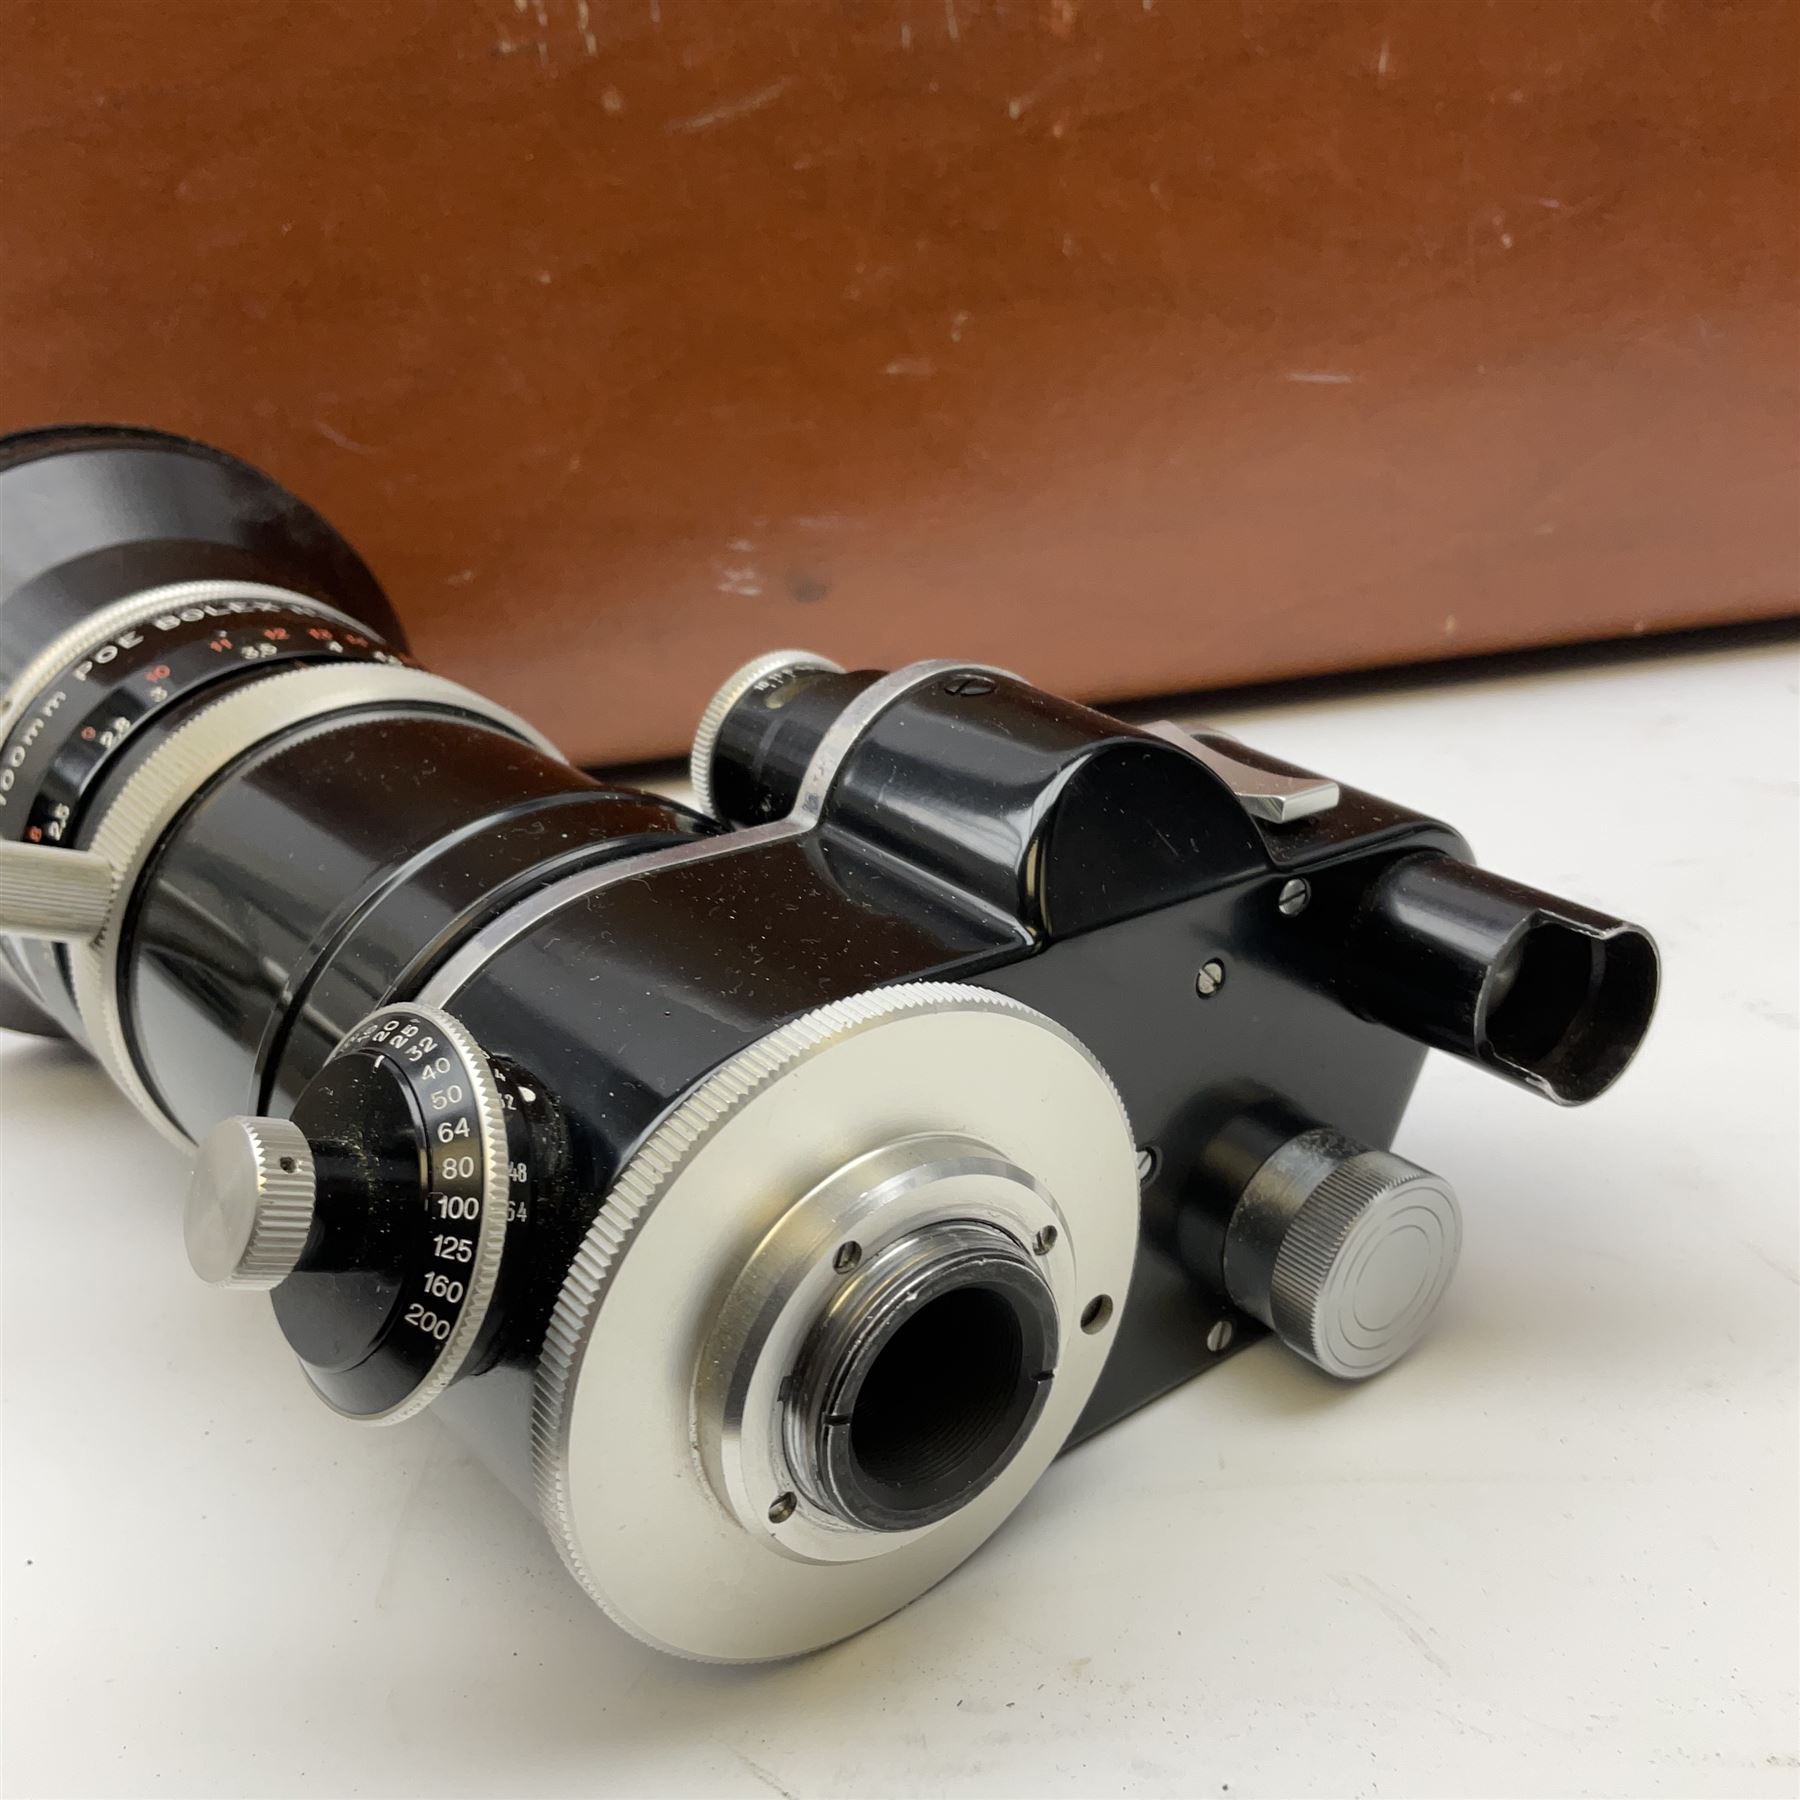 Paillard Bolex H16 Reflex 16mm cine camera with handgrip and turret for interchangeable lenses - Image 11 of 15